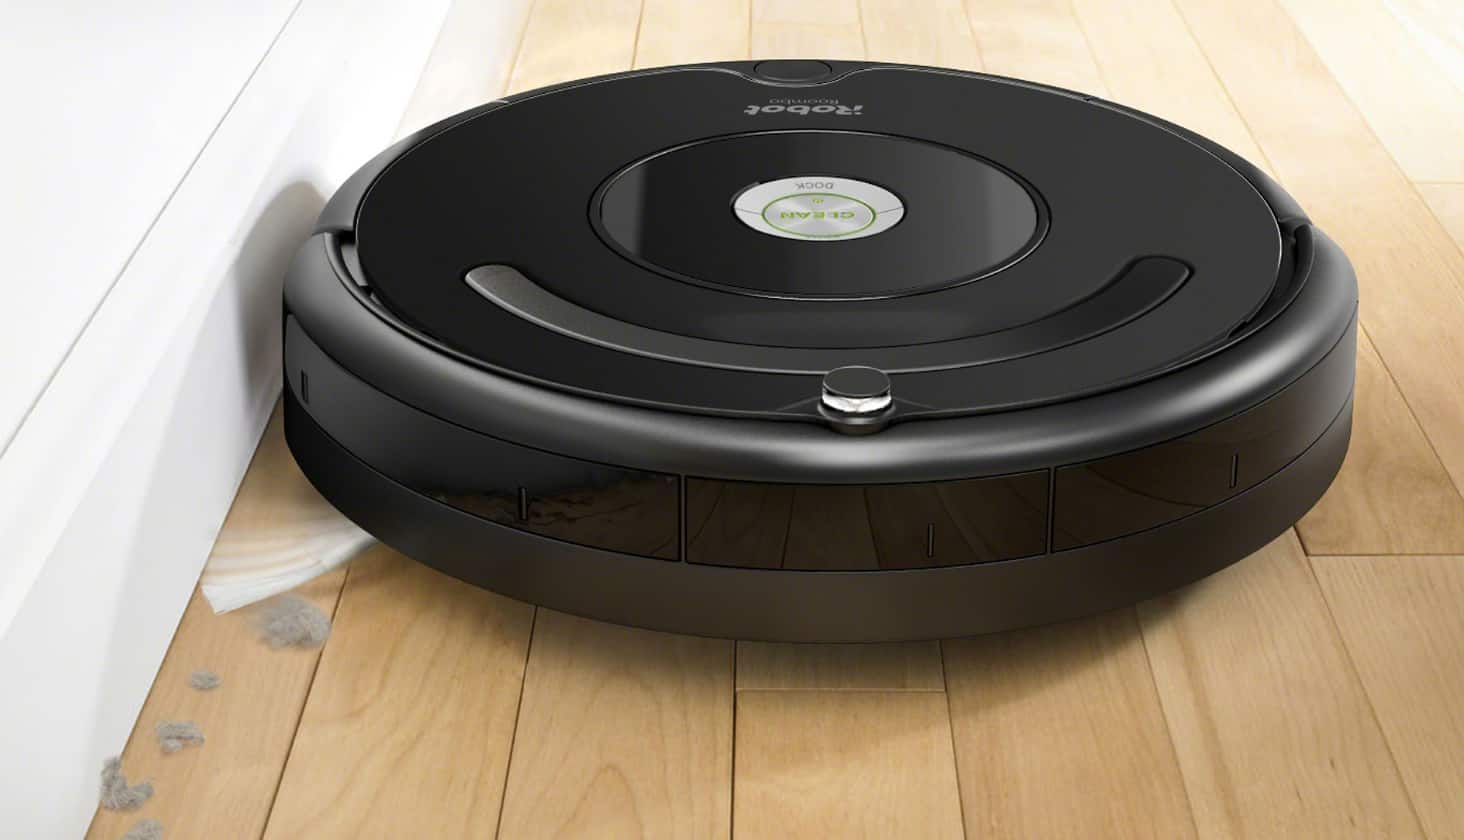 iRobot Roomba vacuum on a hardwood floor next to a wall.